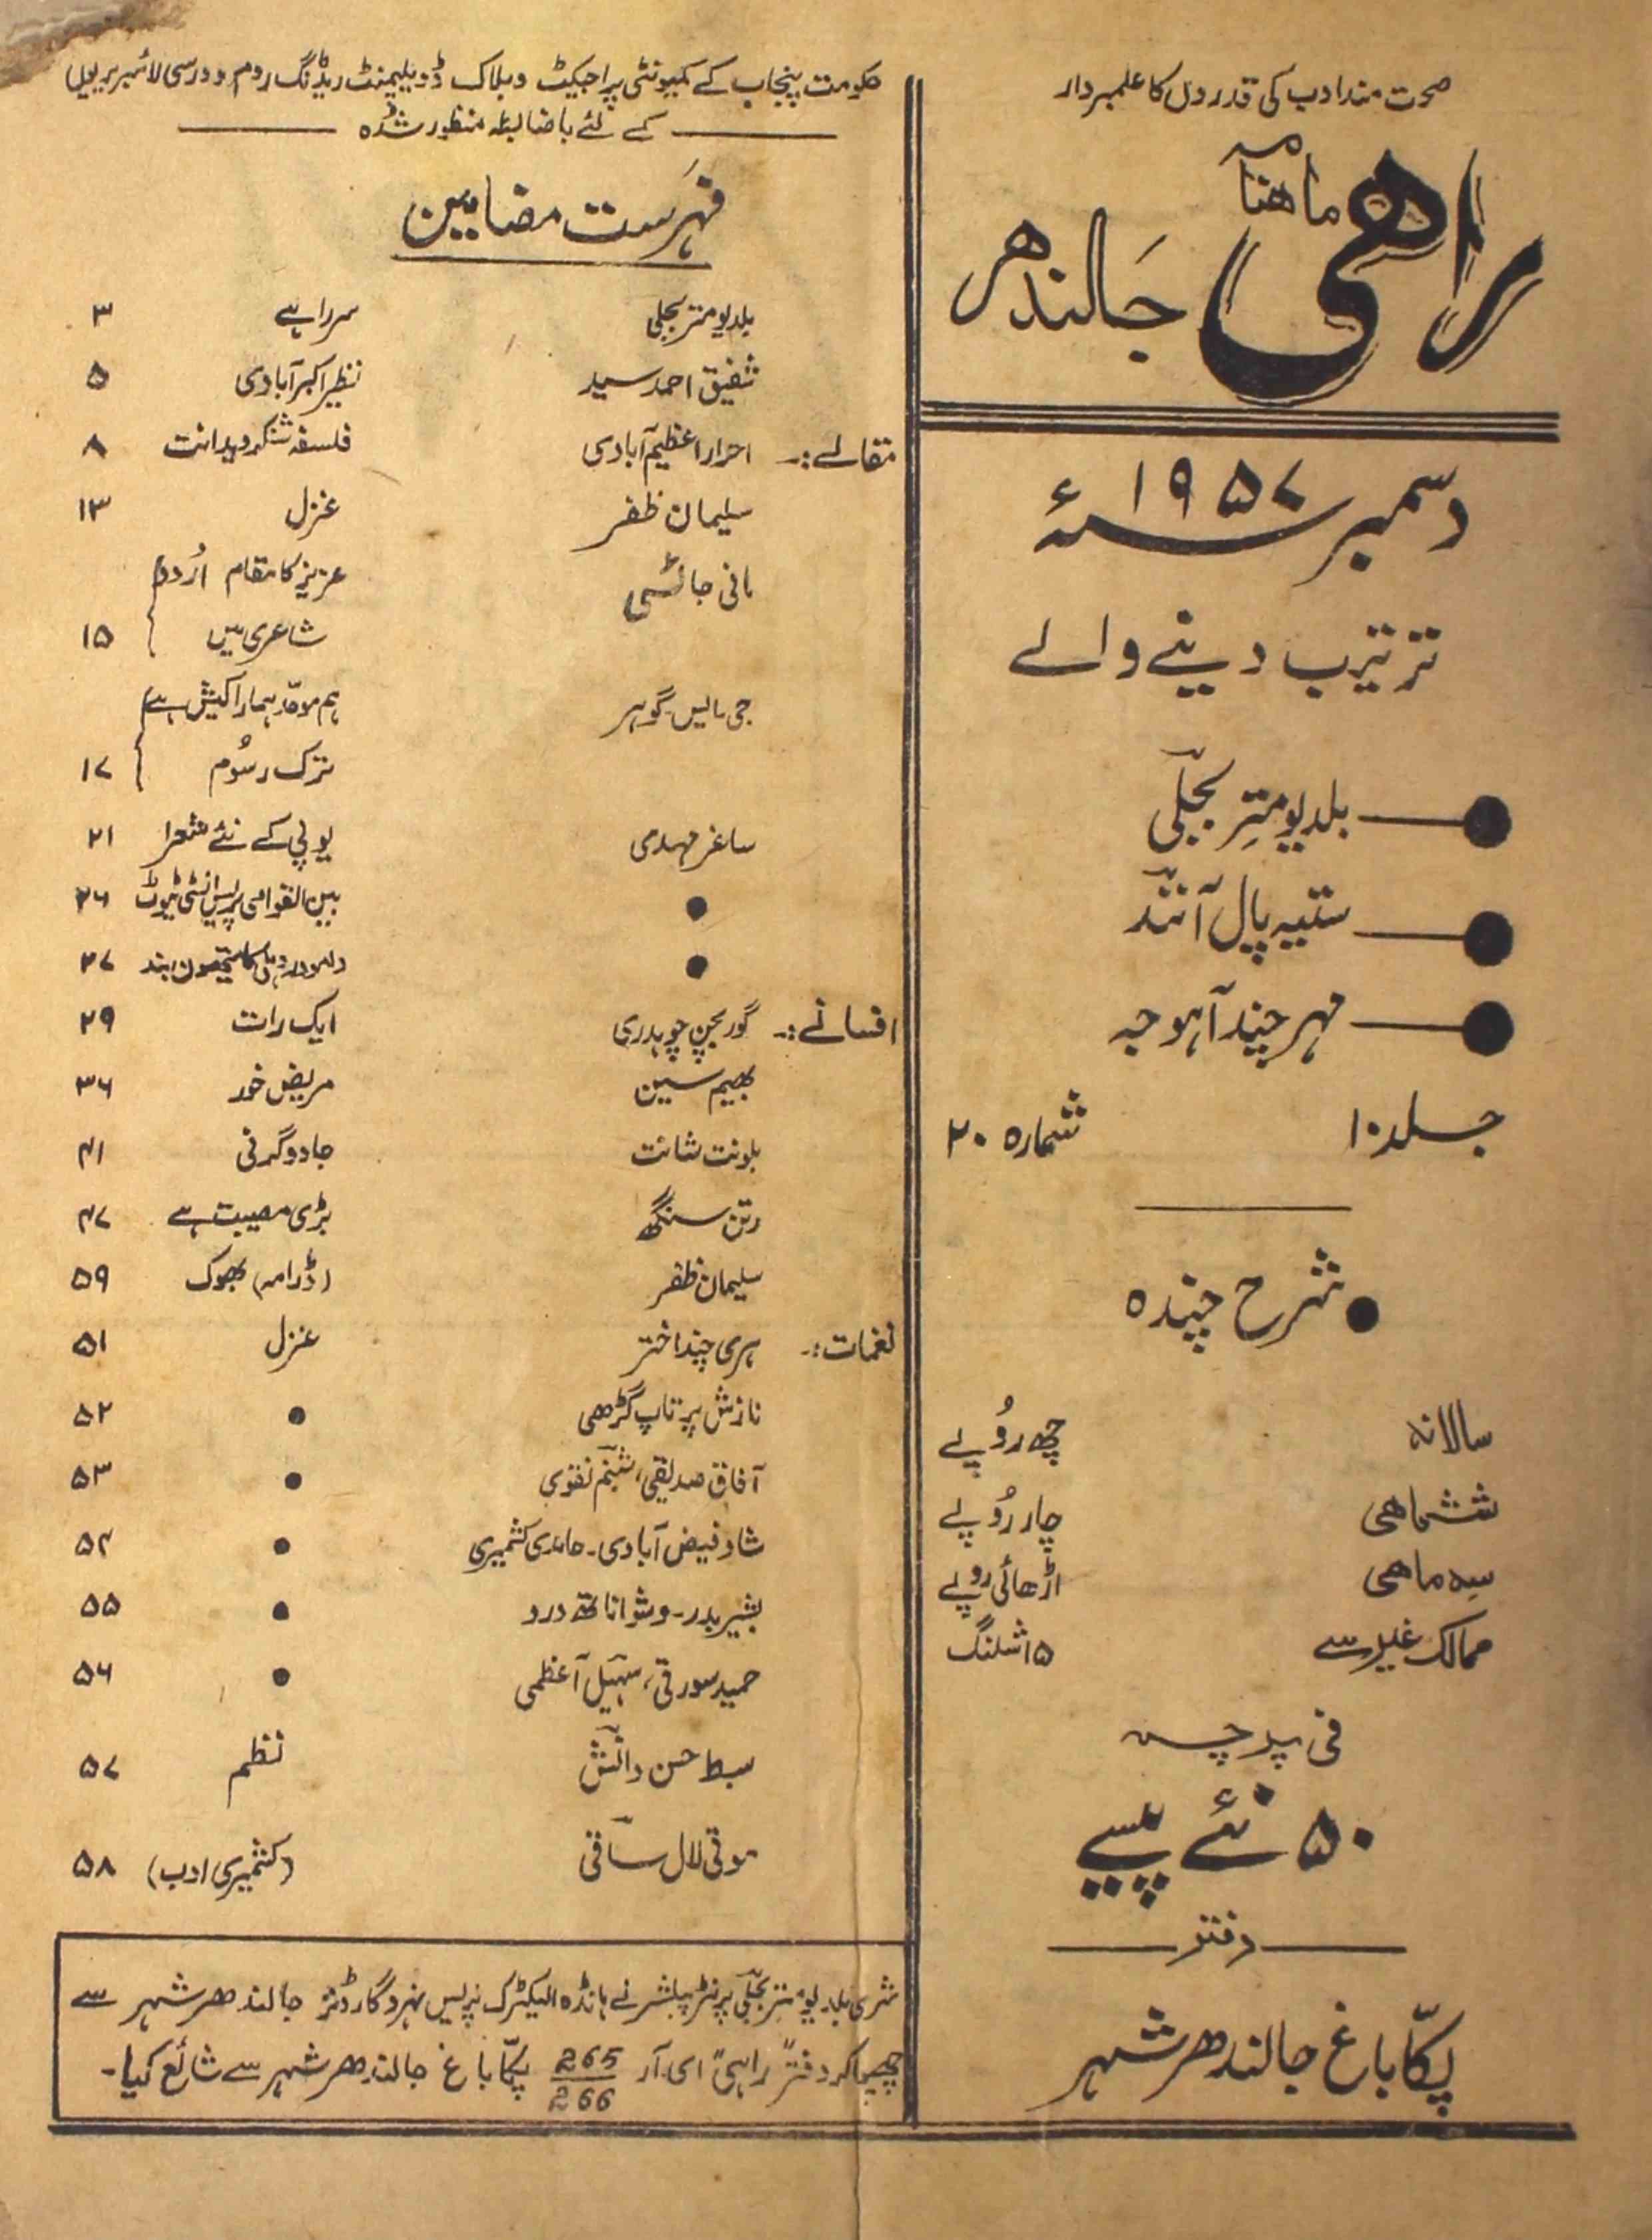 Rahi Jild 10 Shumara 20 December 1957-Svk-Shumara Number-020